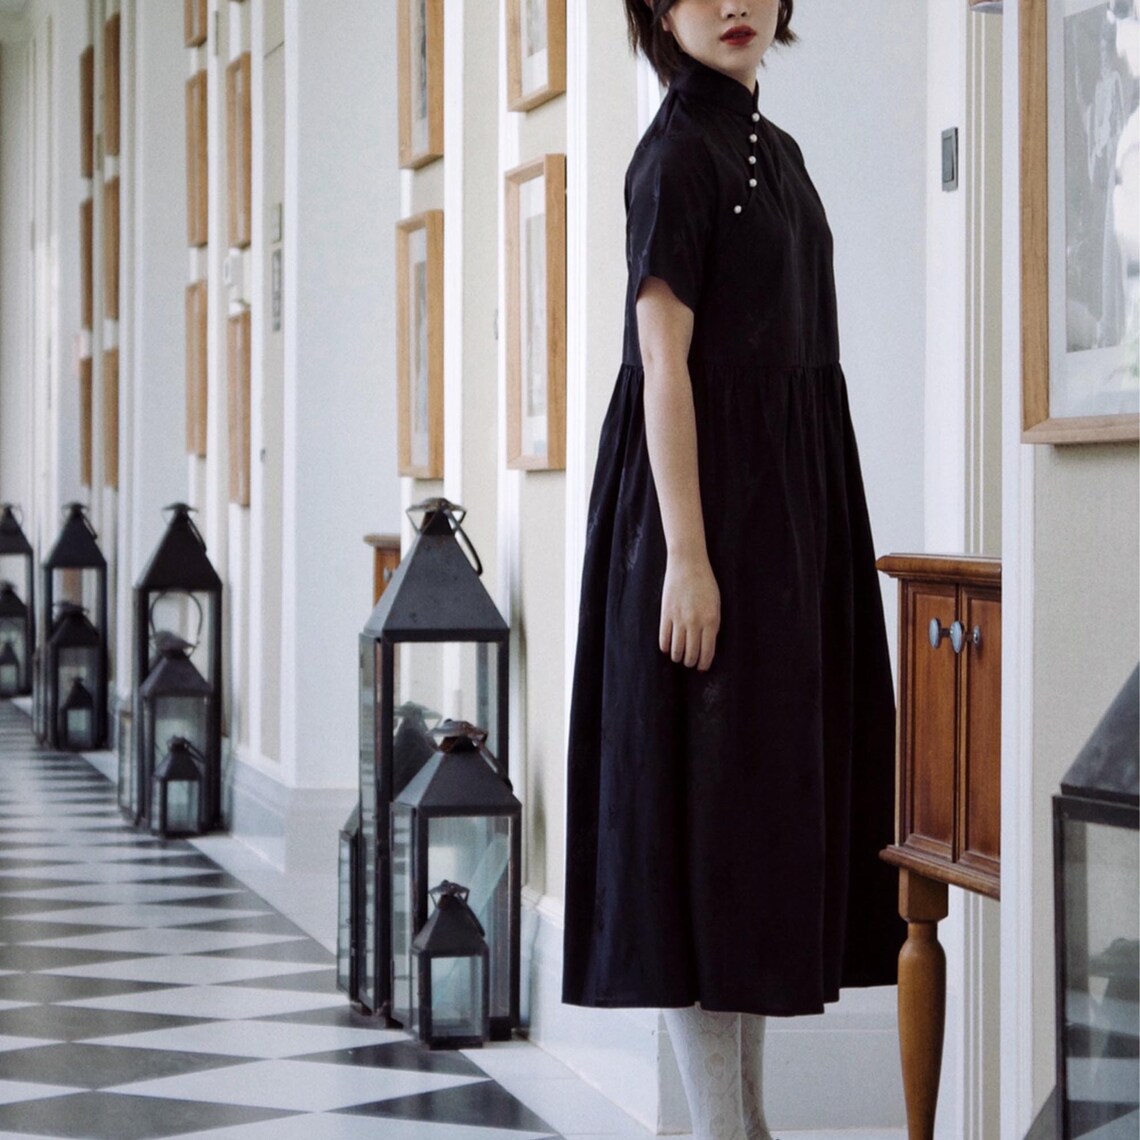 Chinese Qipao Dress Modified Qipao Dress Black Qipao Loose - Etsy